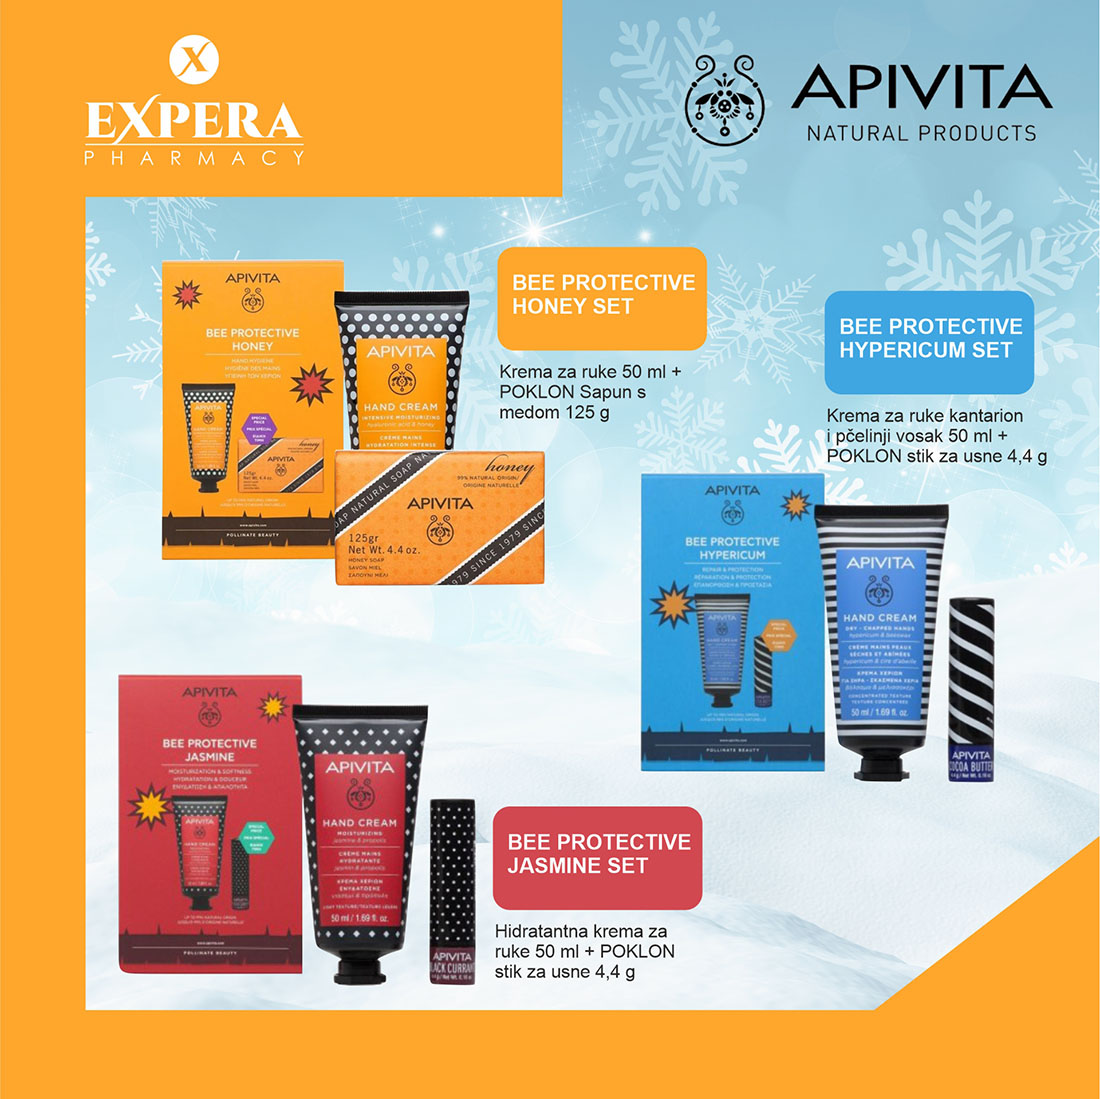 Apivita Expera pharmacy